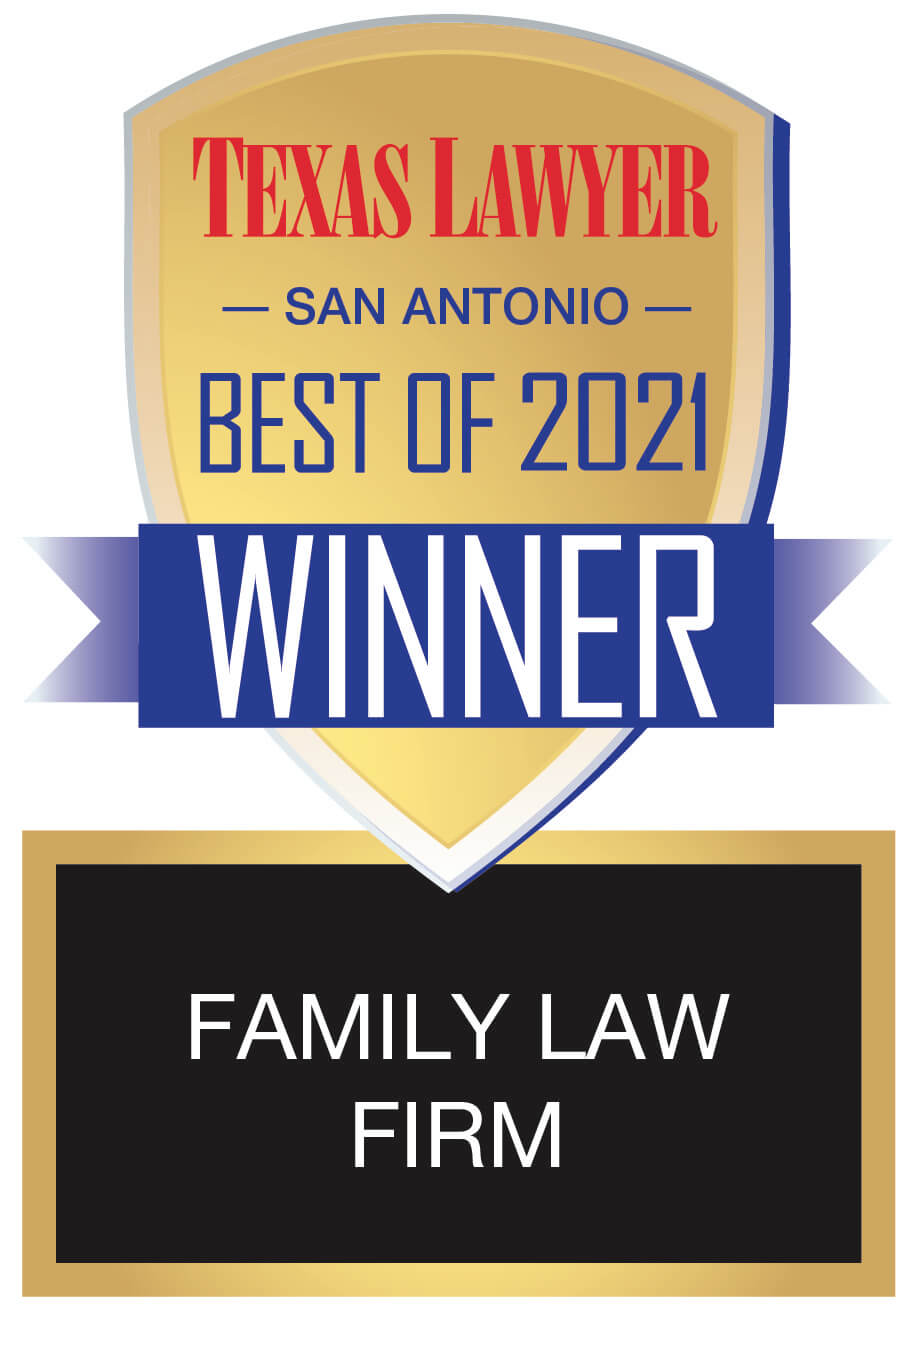 Texas San Antonio Lawyer Best of 2021 Winner